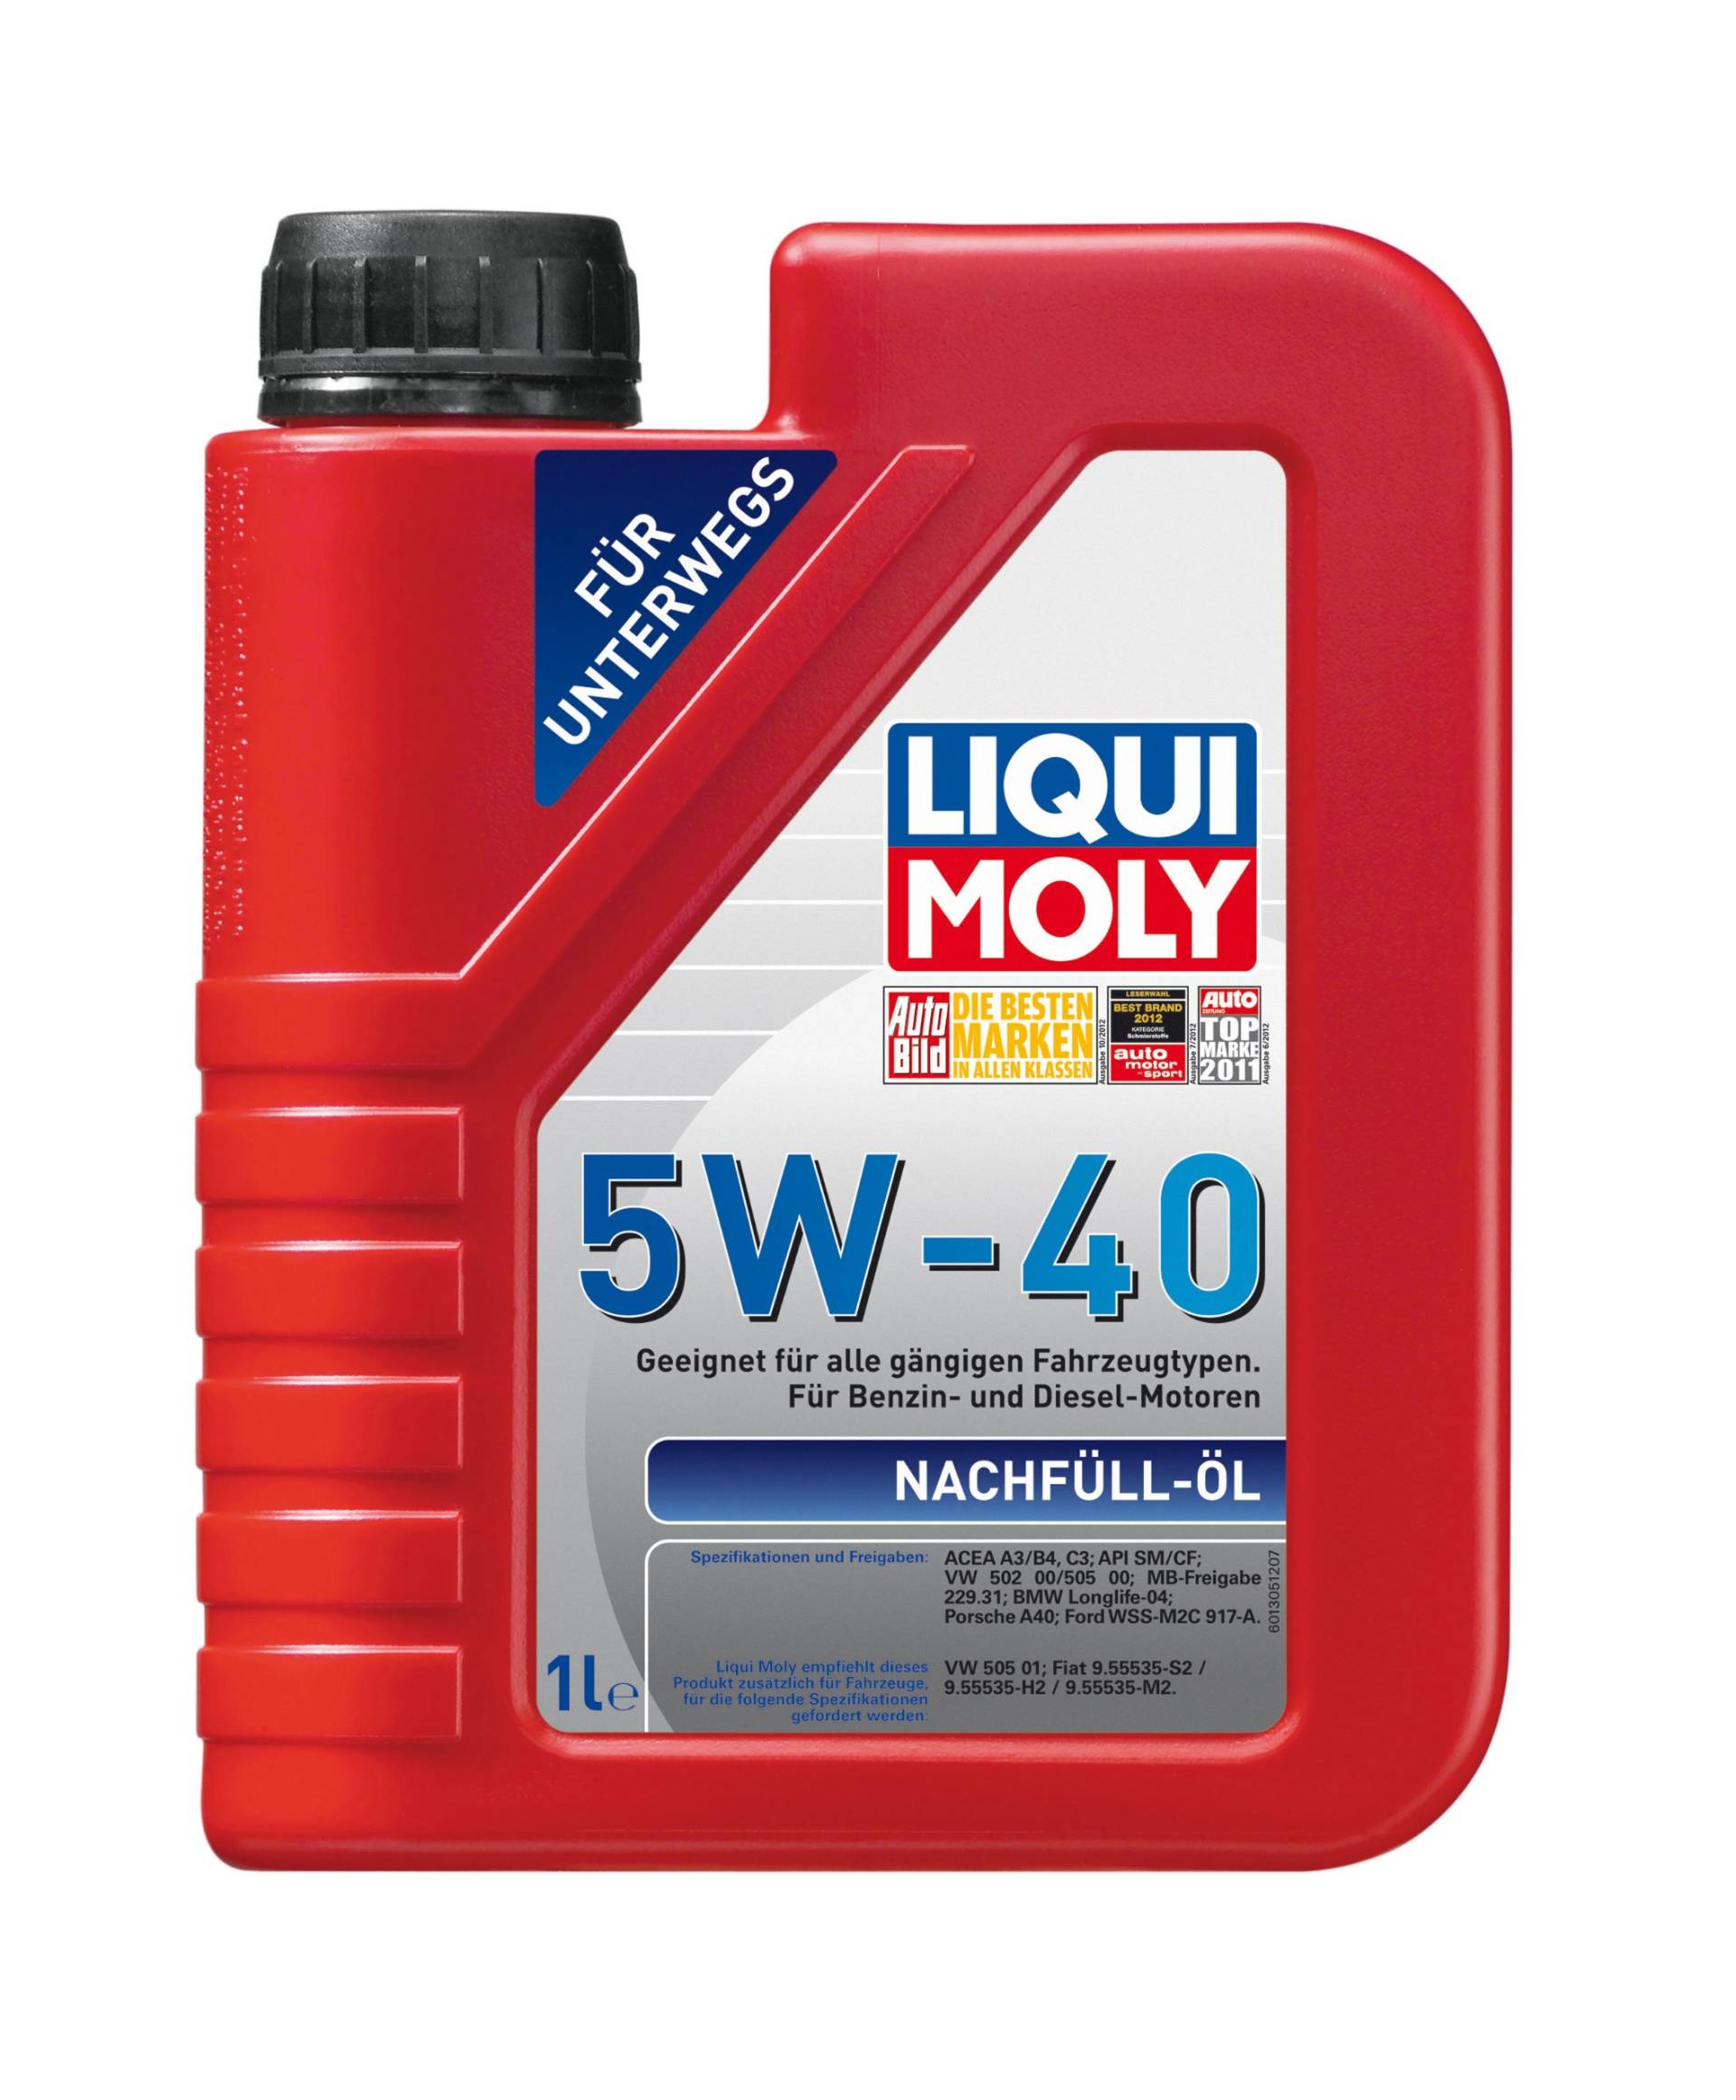 LIQUI MOLY 1305 Nachfüll-Öl 5W-40 1 l von Liqui Moly